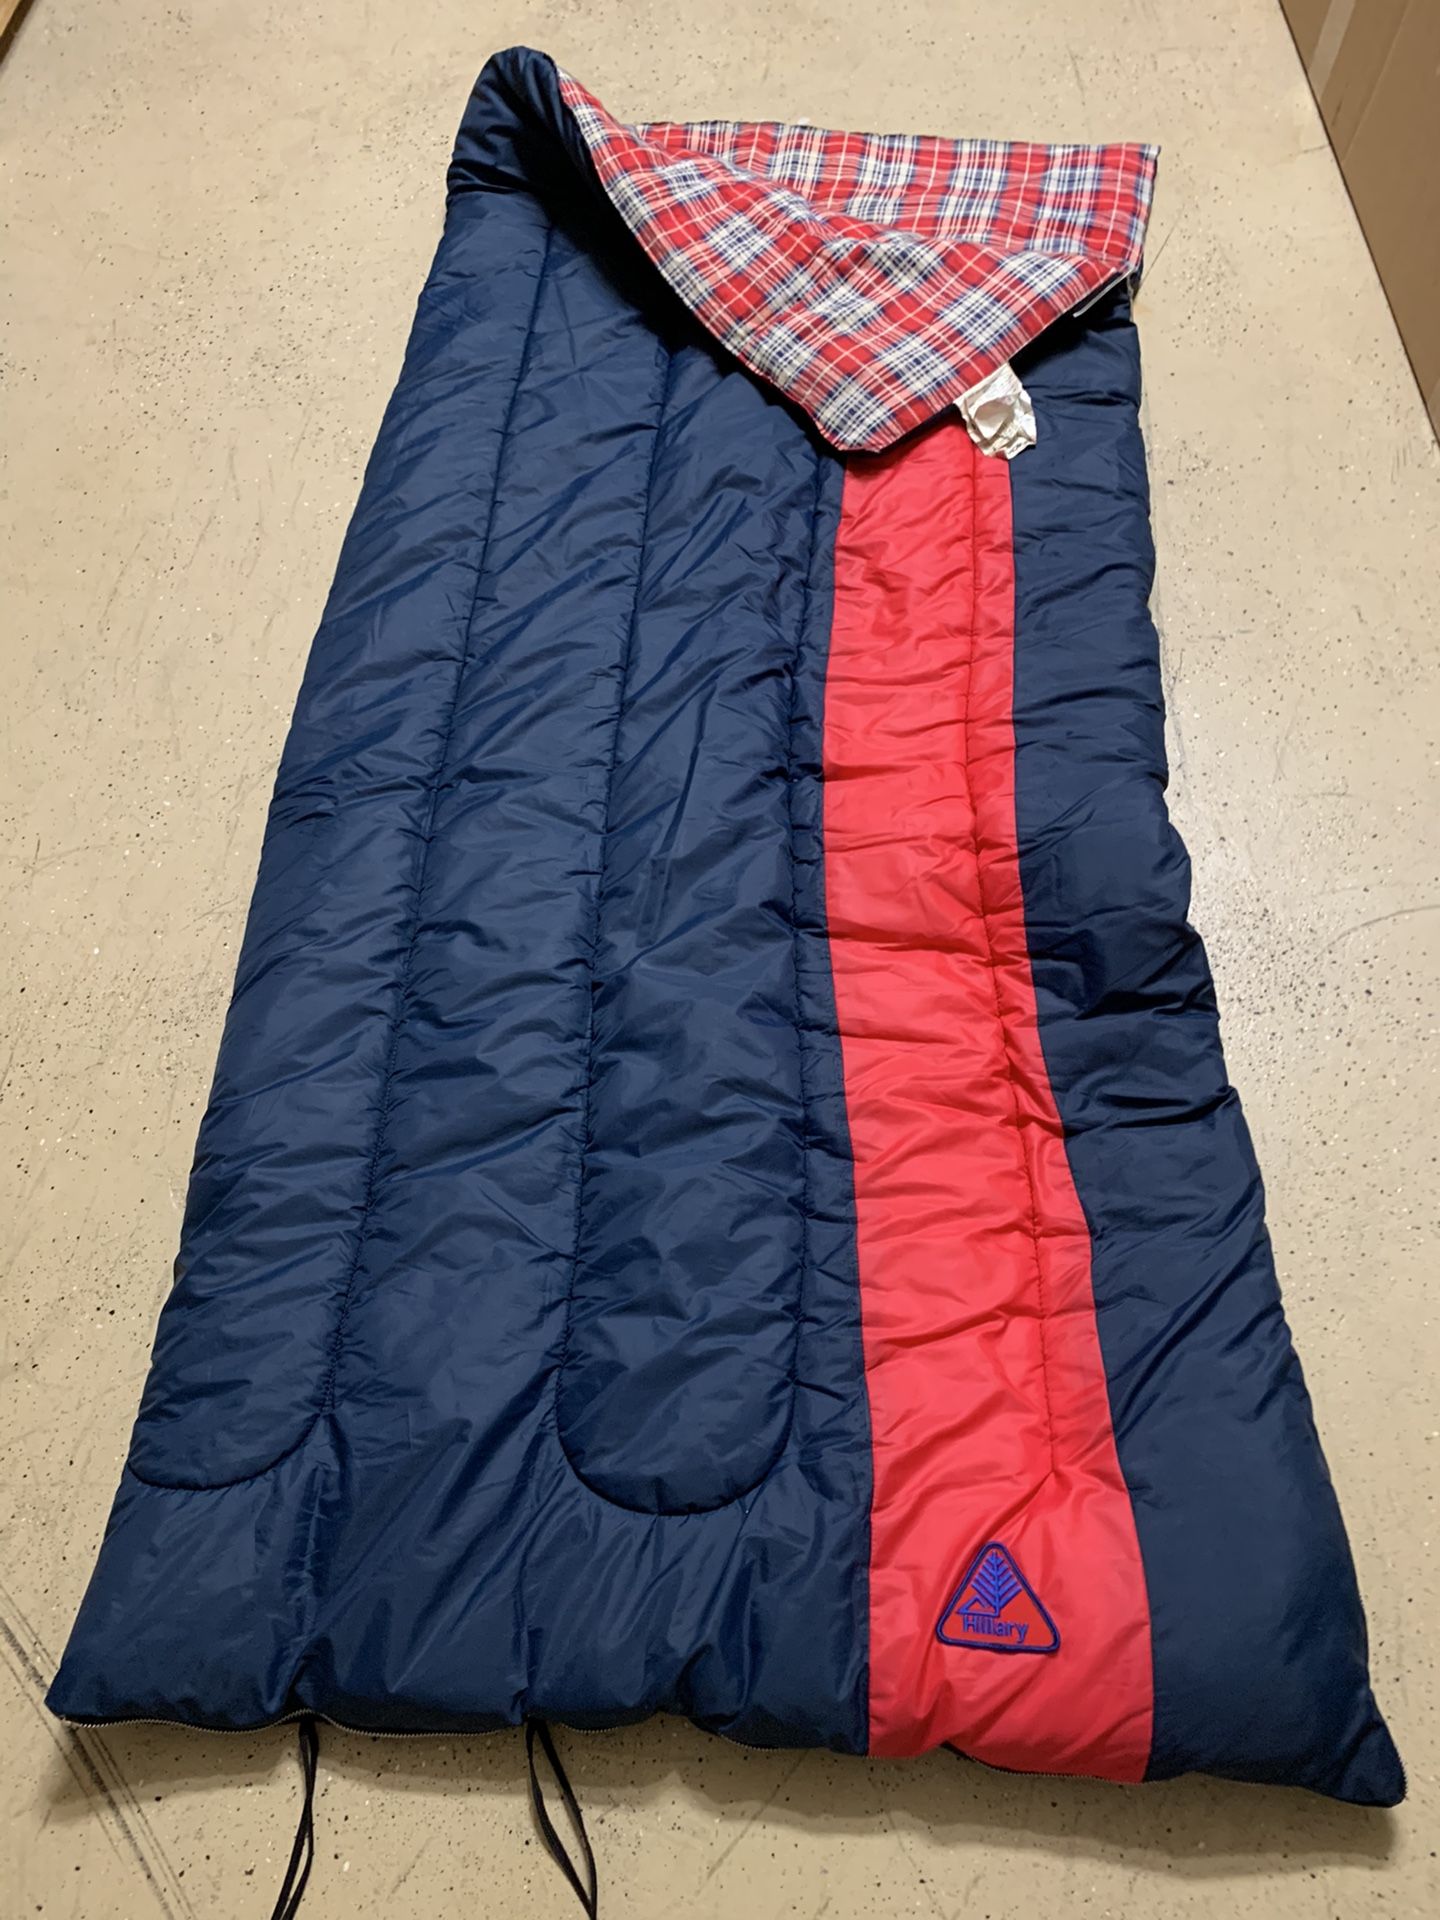 Sleeping Bag - Hillary DUPONT HOLLOFIL 808 Plaid Fleece Lined Adult